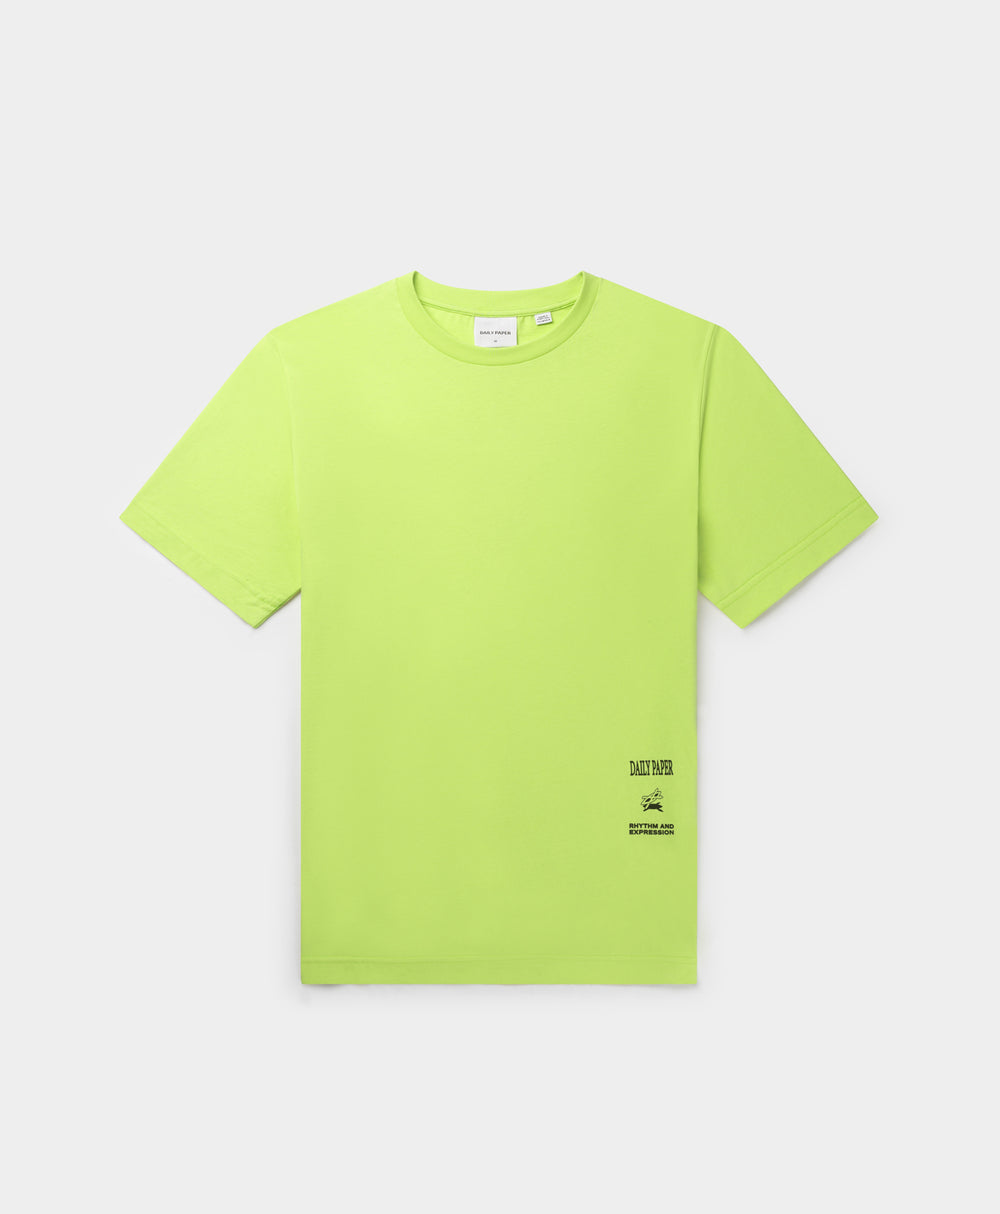 DP - Daiquiri Green Metronome T-Shirt - Packshot - Front